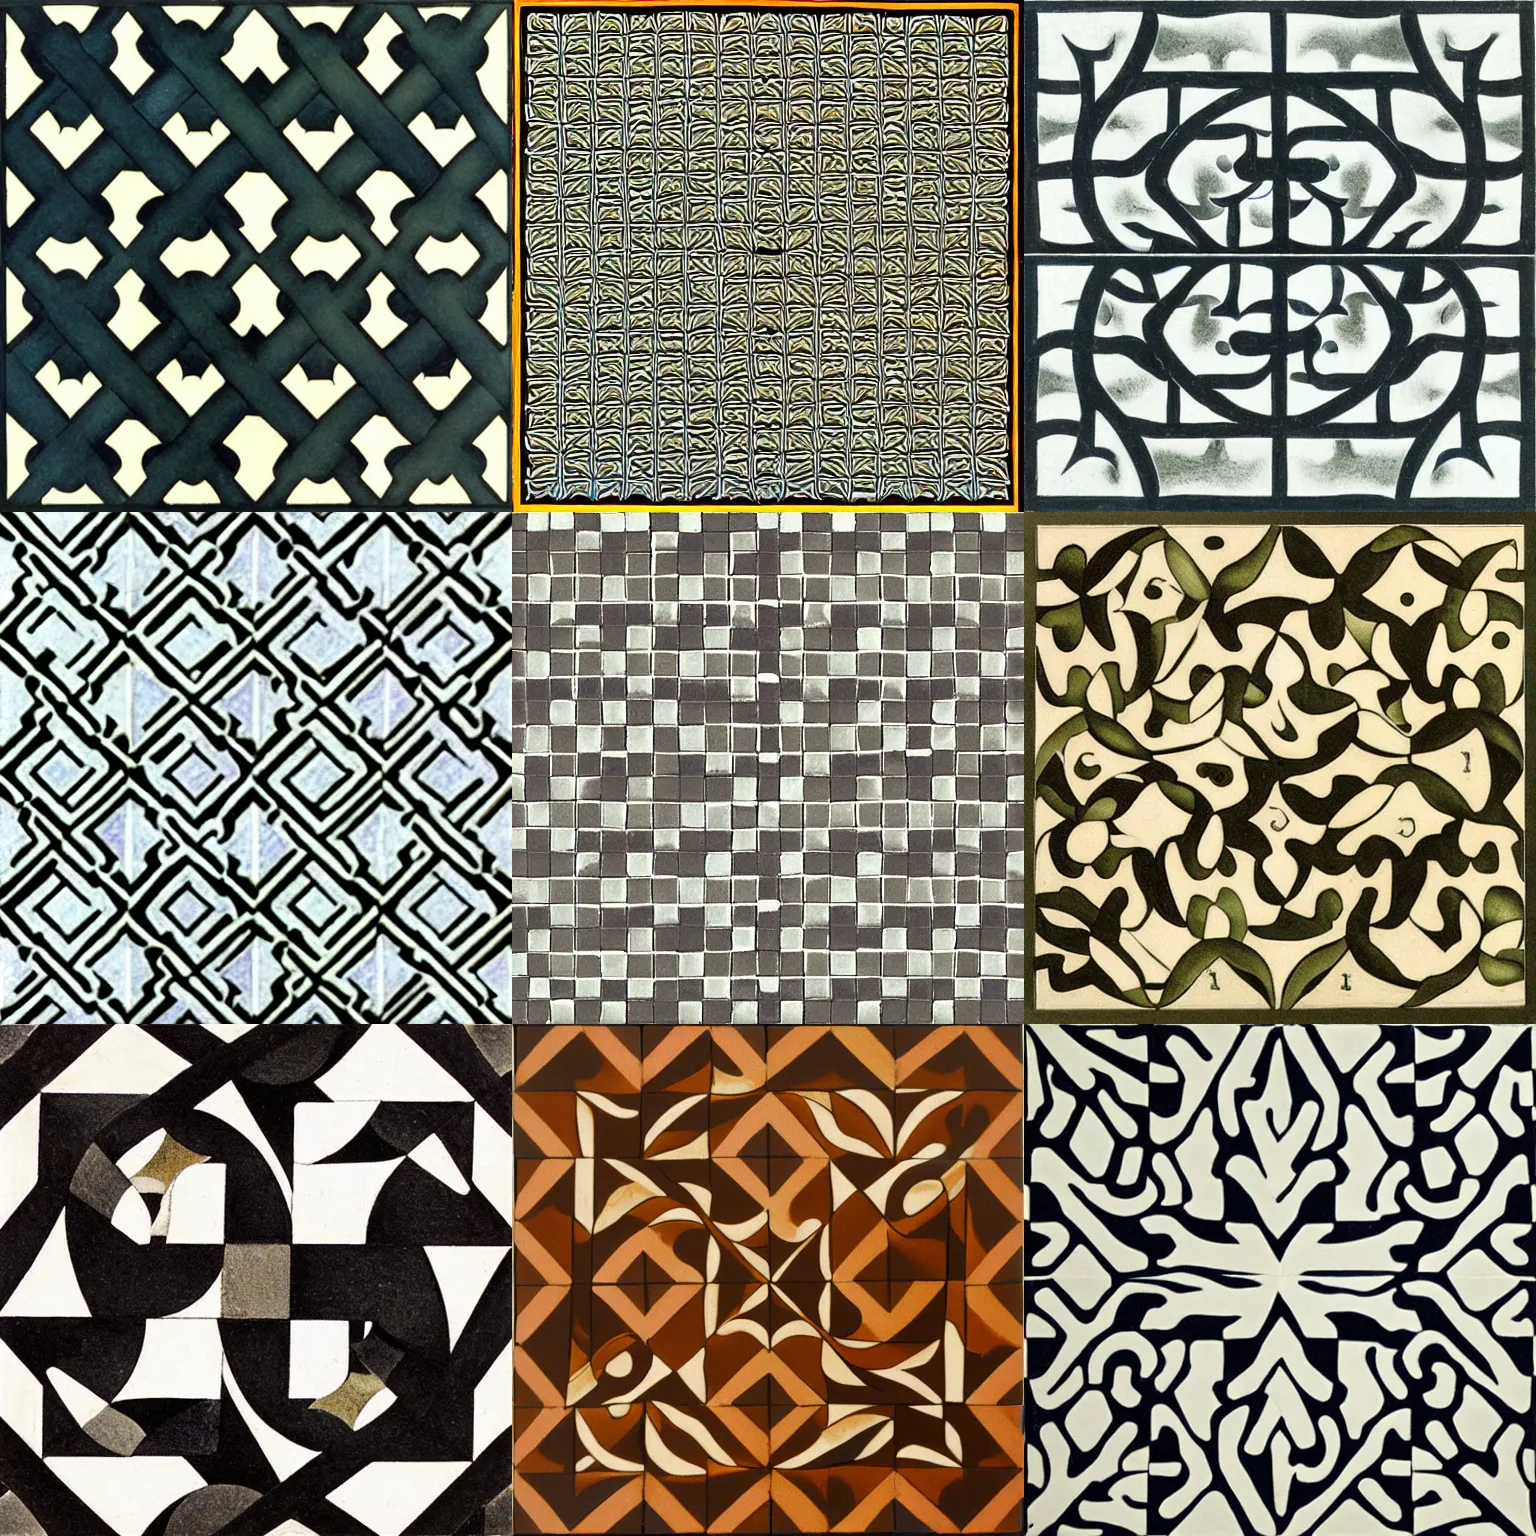 Prompt: a tiling by M. C. Escher